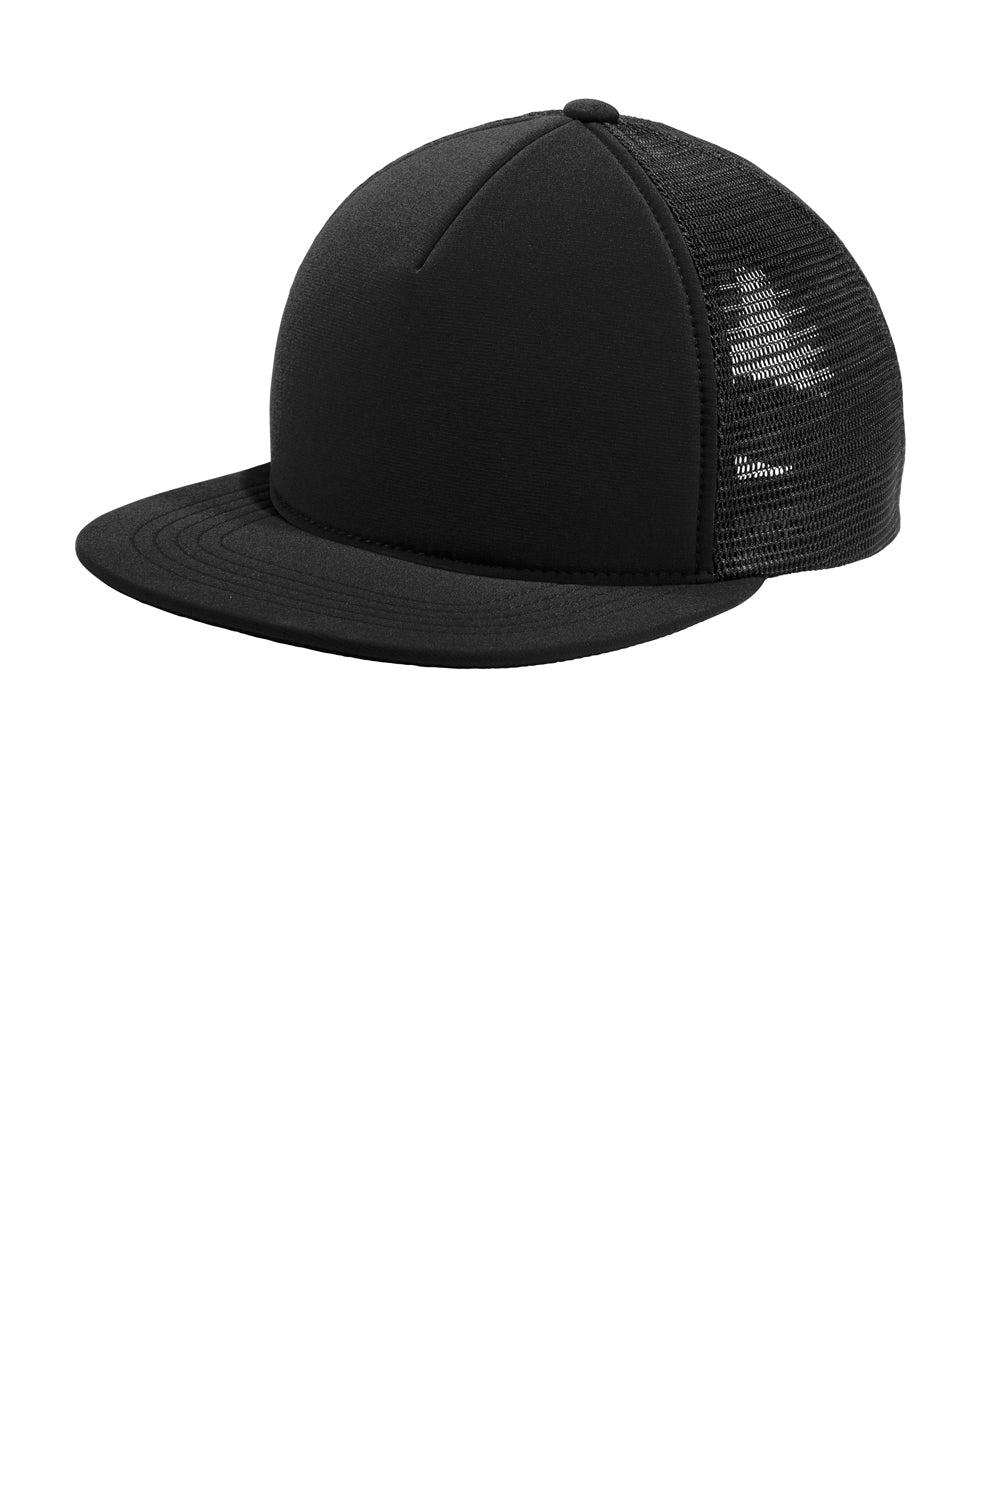 Port Authority C937 Foam Outdoor Felxfit Adjustable Hat Black Front